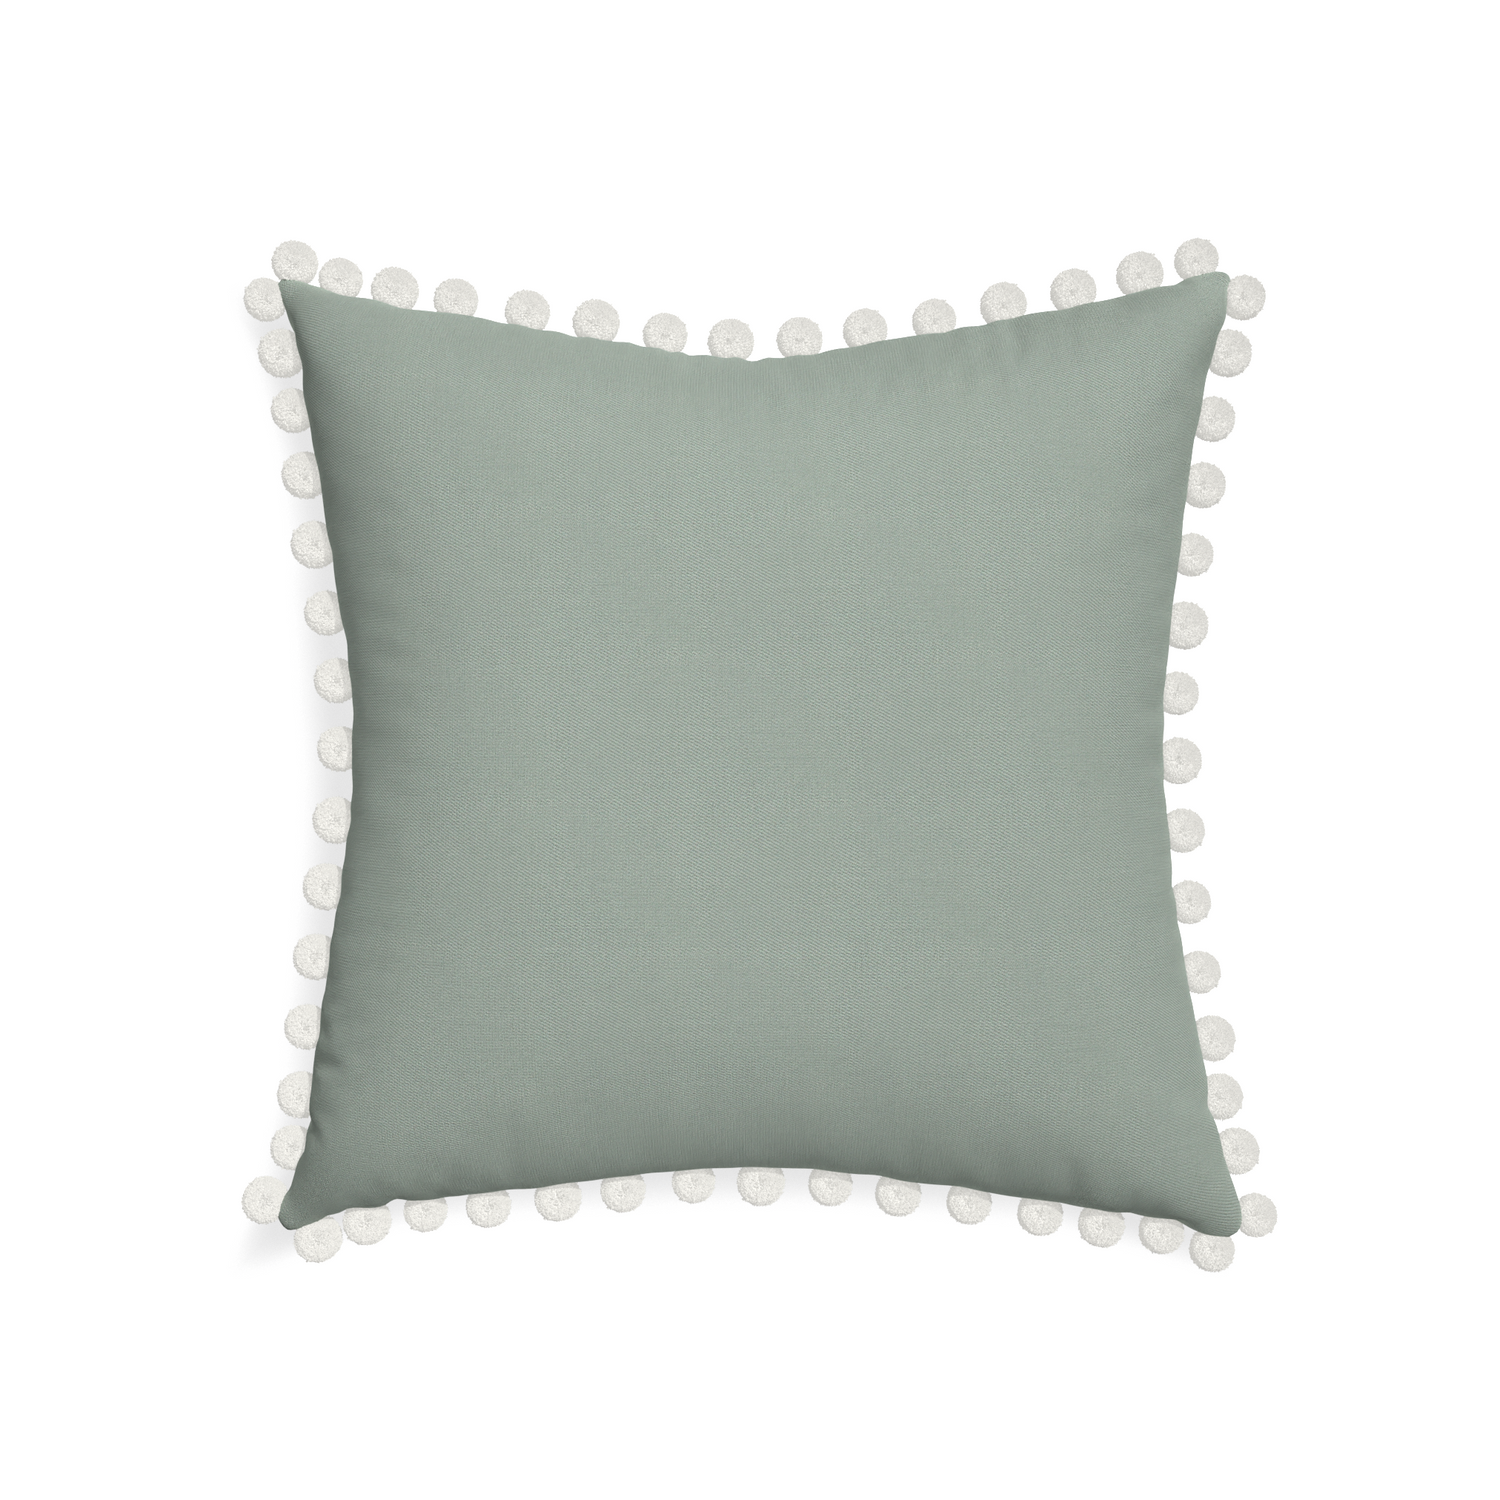 22-square sage custom pillow with snow pom pom on white background